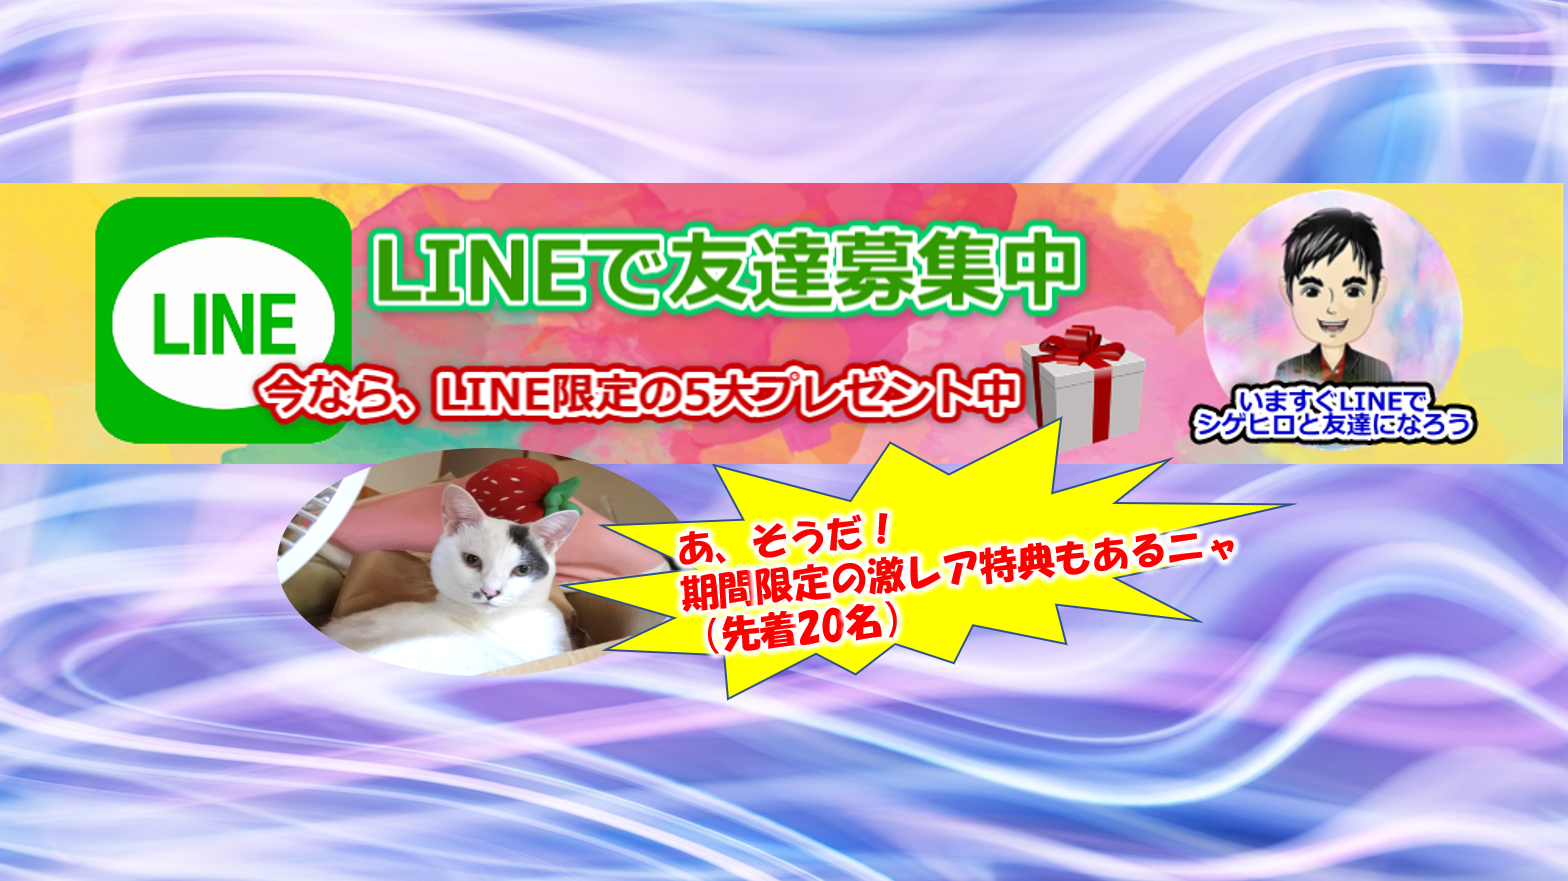 LINE（ライン）無料登録で5つの秘密プレゼント（3万円相当）